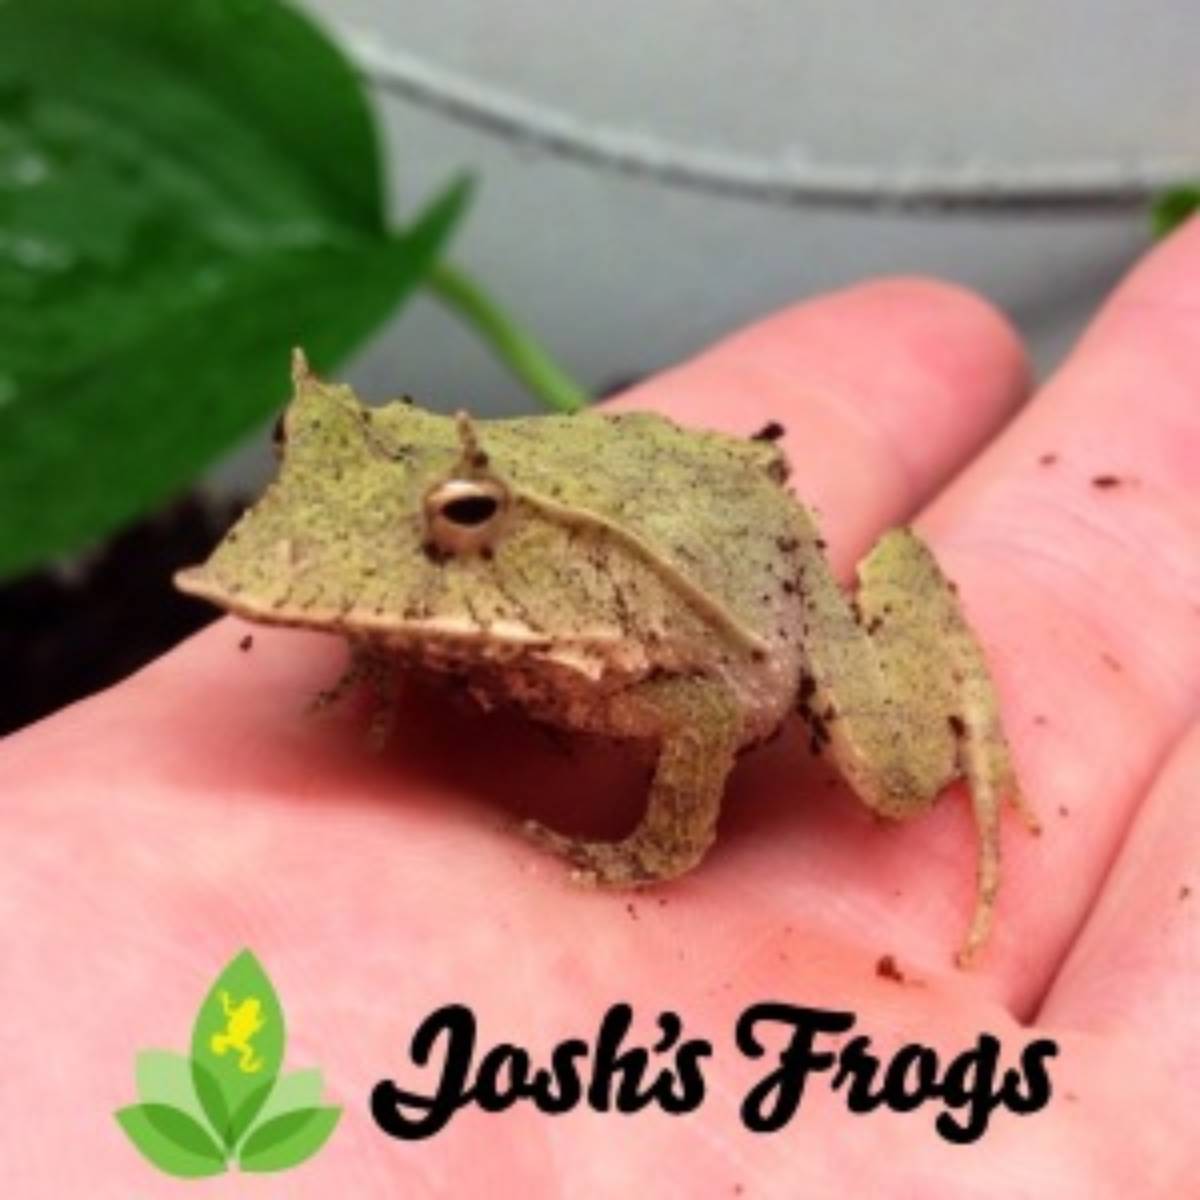 solomon island leaf frog captive bred for sale Josh's frogs